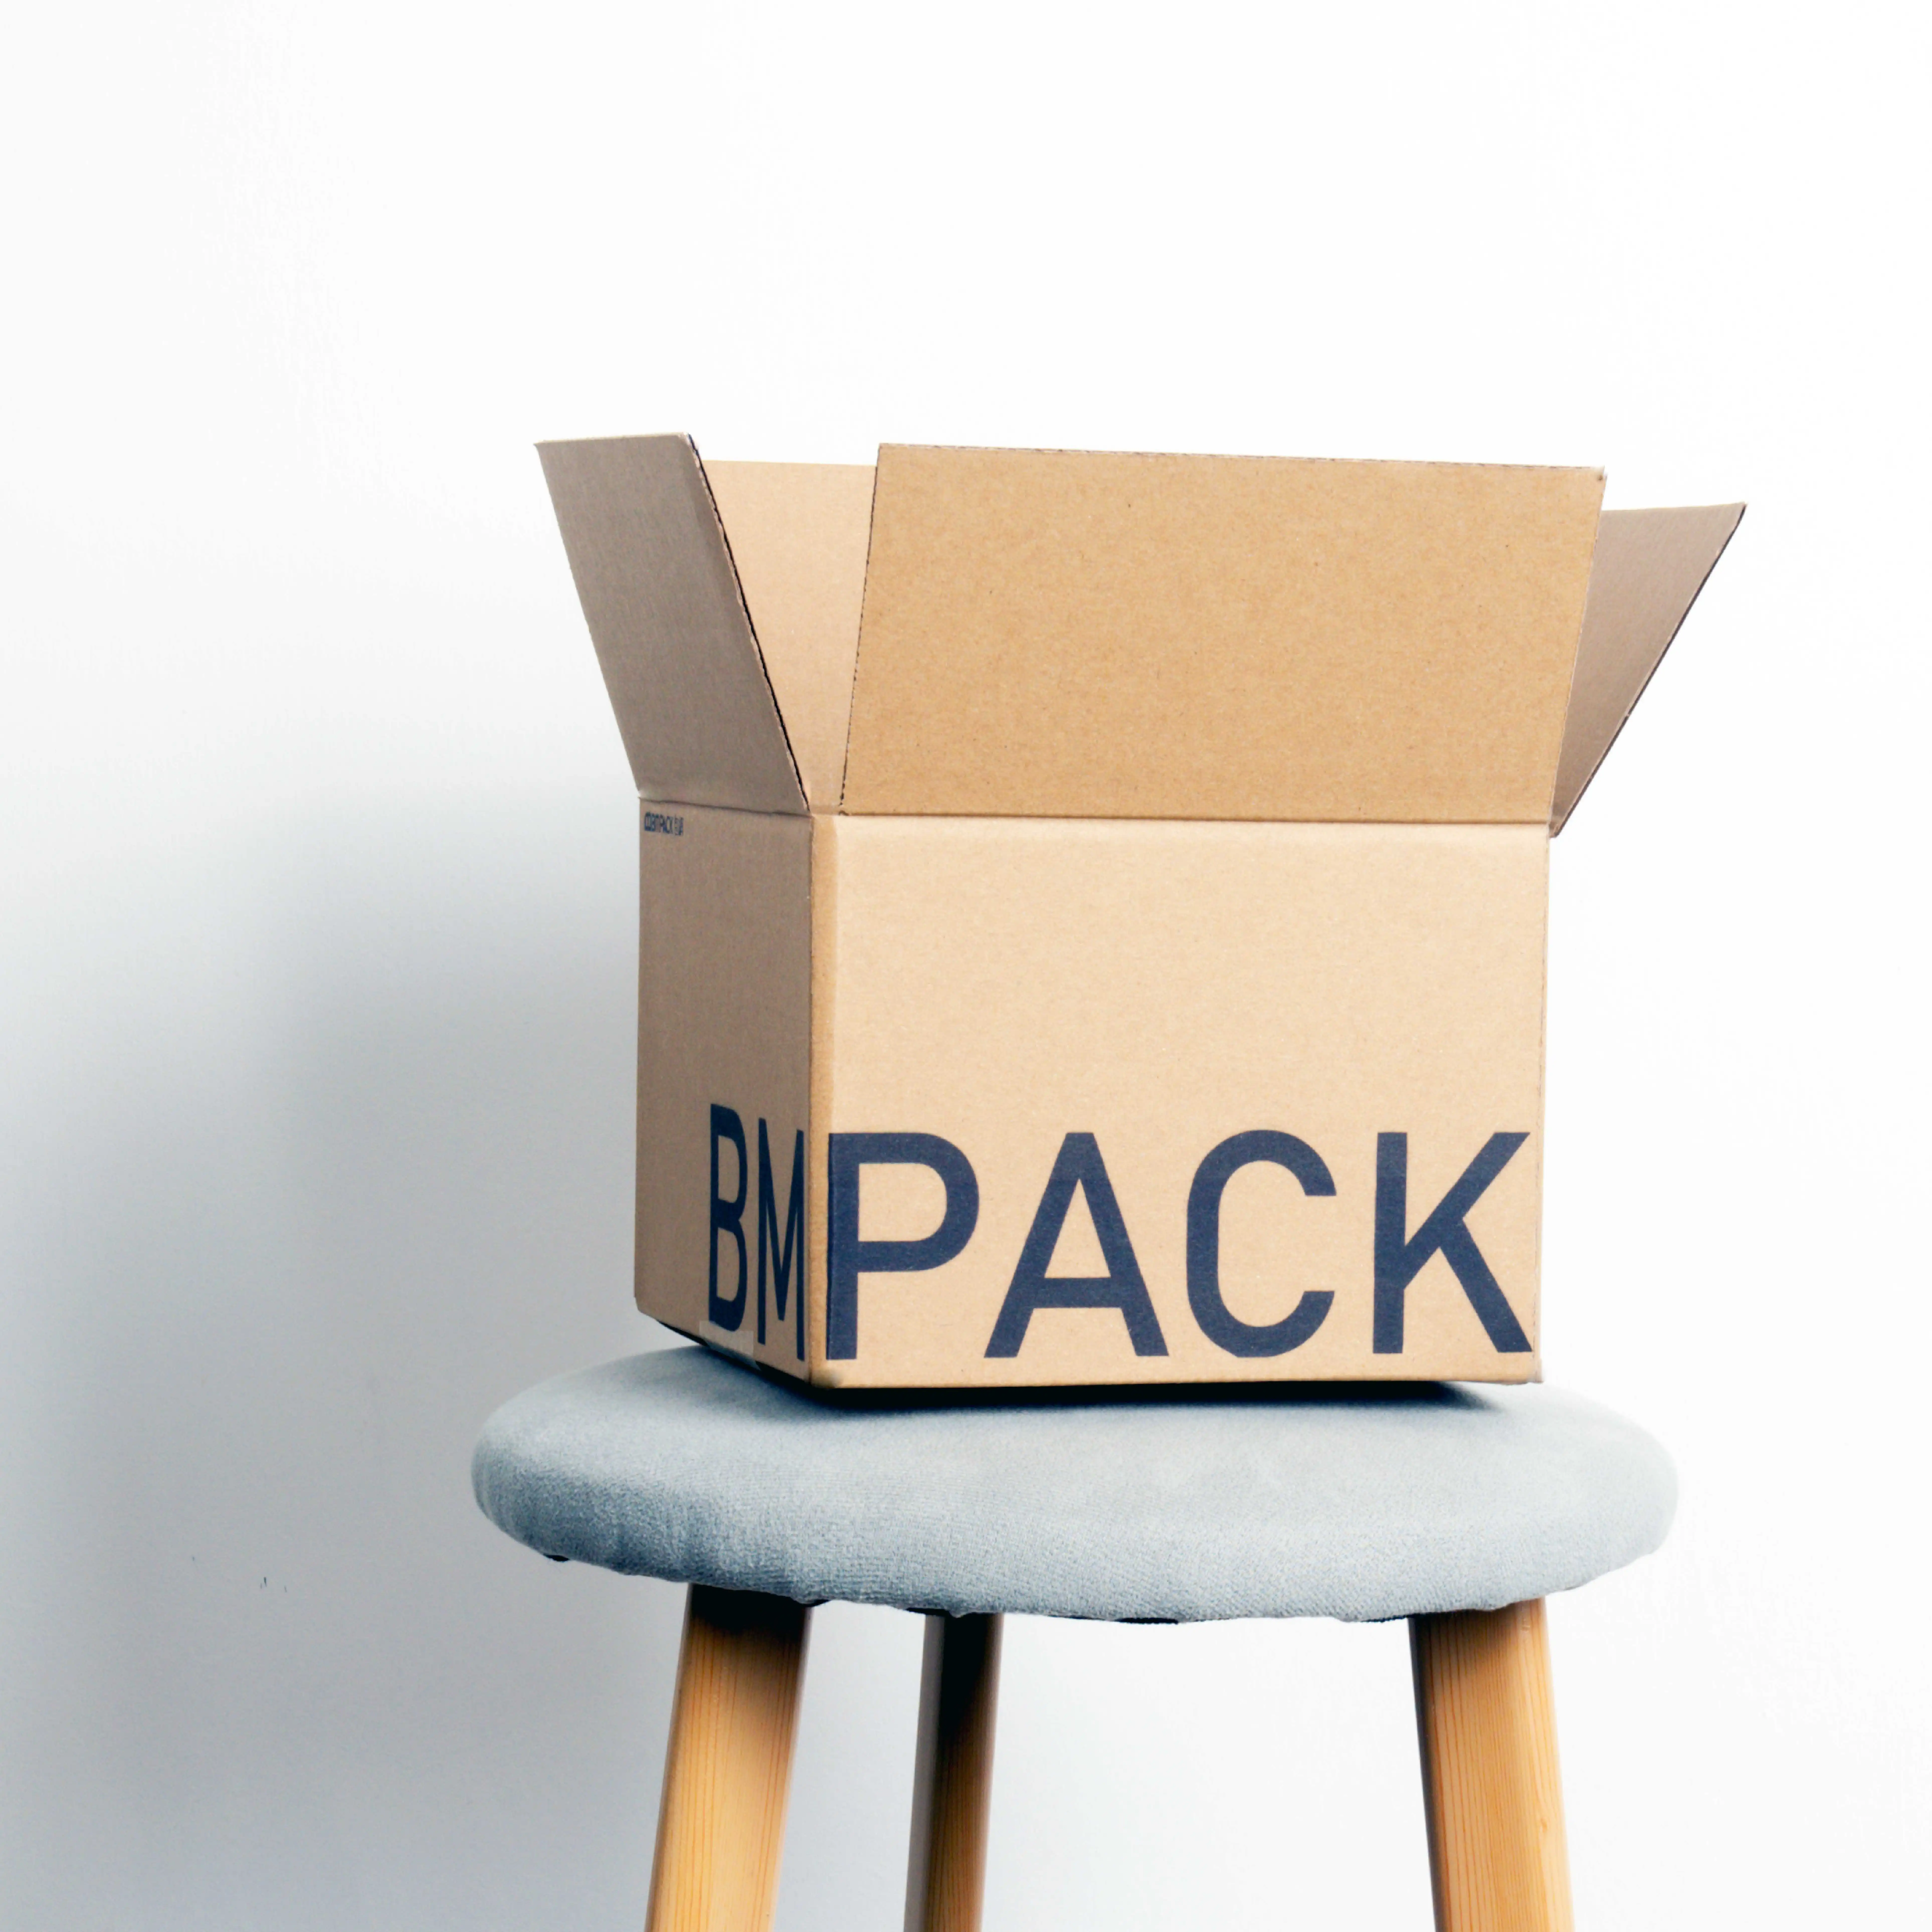 BM PACK 包網的訂紙箱產品防摔耐撞